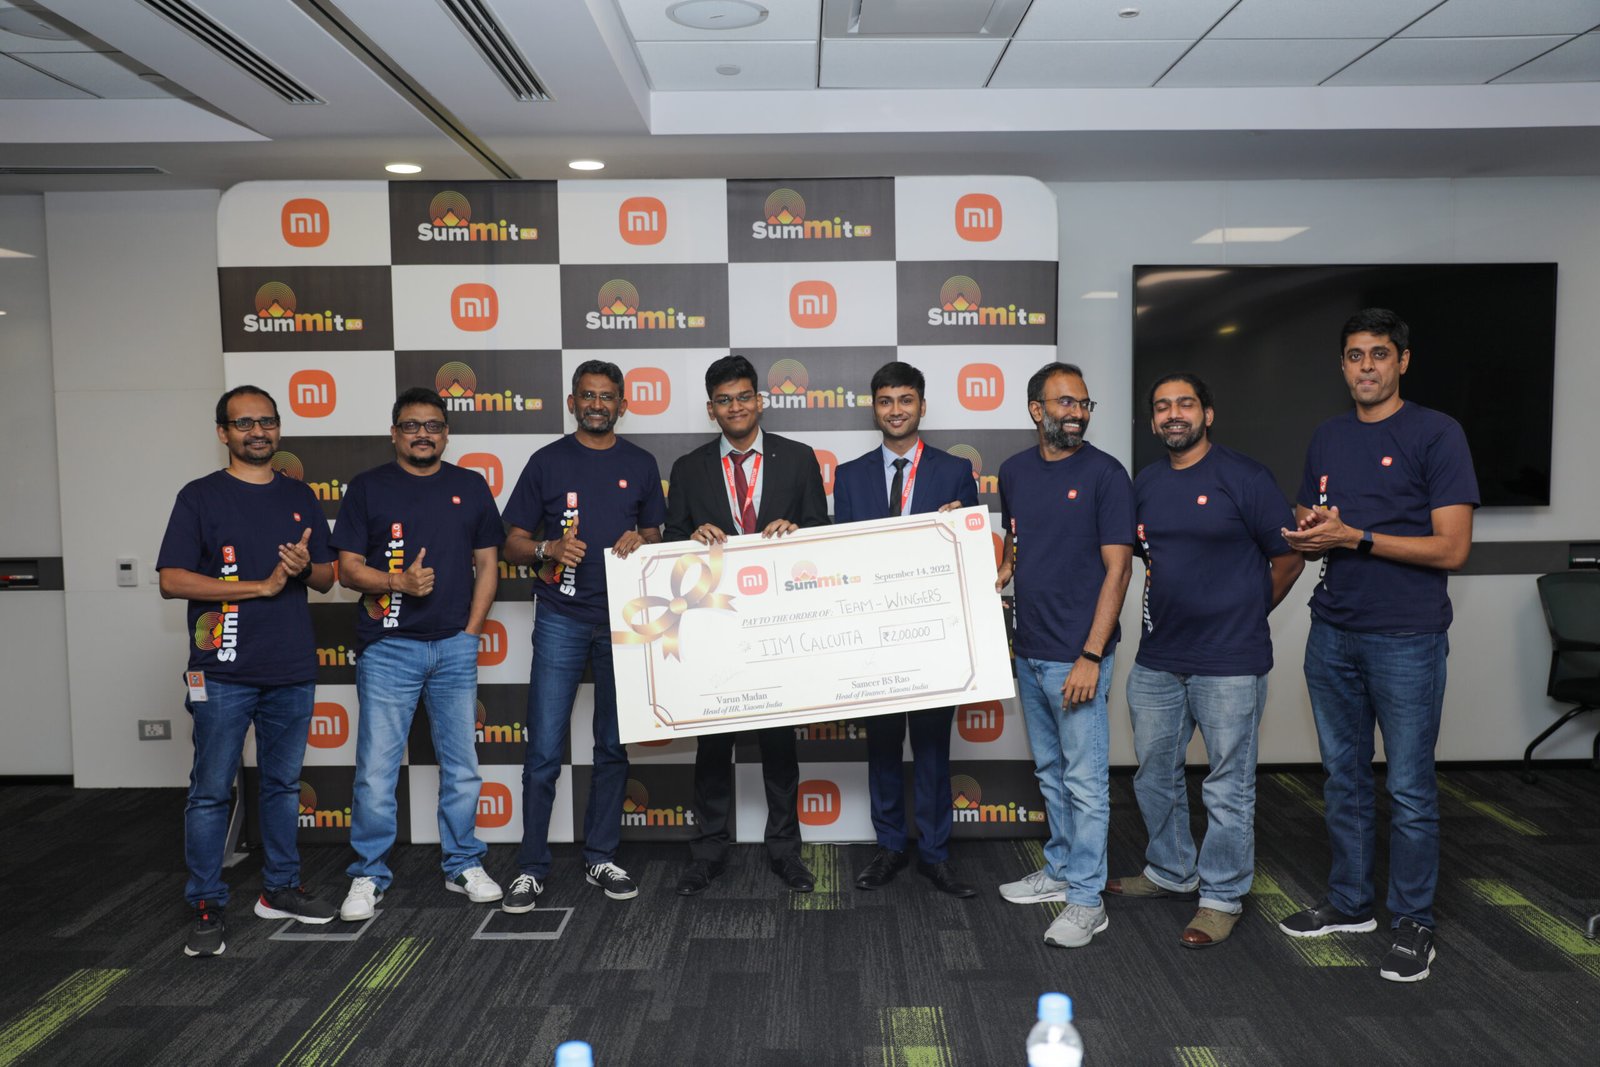 Muralikrishnan B President and Raghu Reddy CBO Xiaomi India felicitate Mi Summit 4.0 winners Umang Agarwal and G Rohan of team Wingers from IIM Calcutta scaled